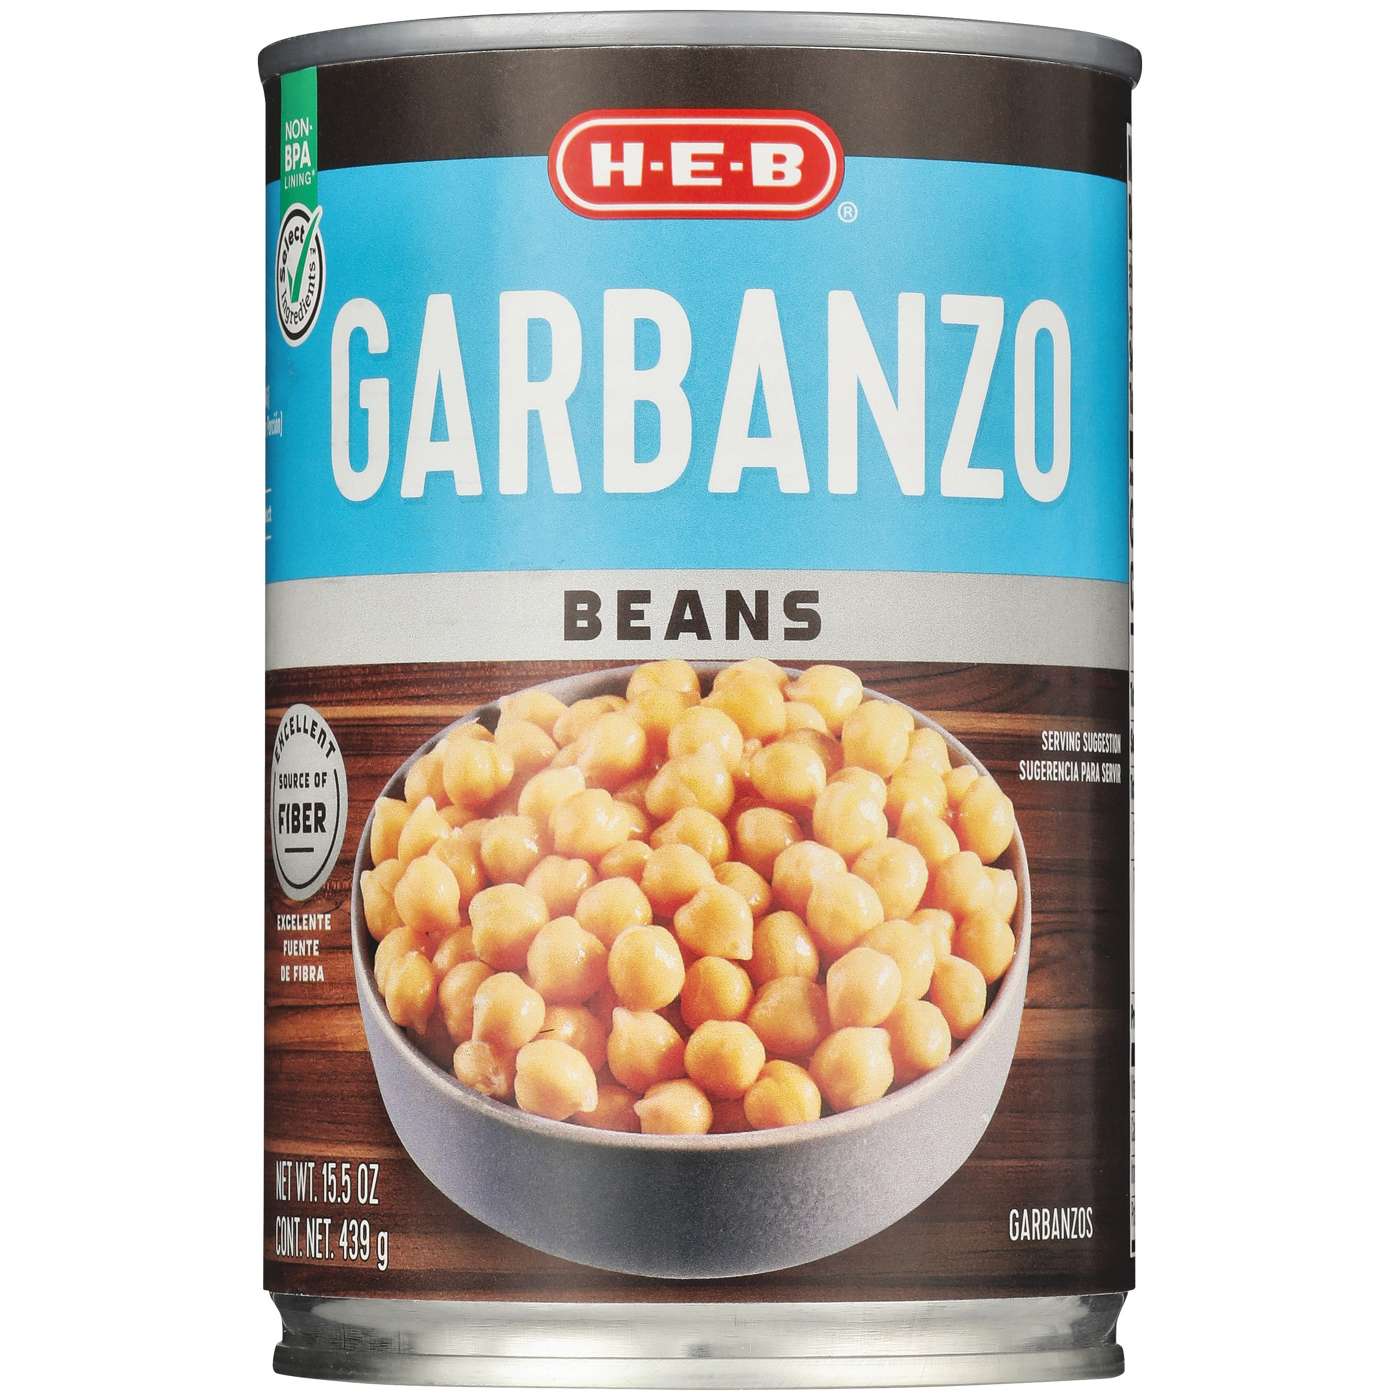 H-E-B Garbanzo Beans; image 1 of 2